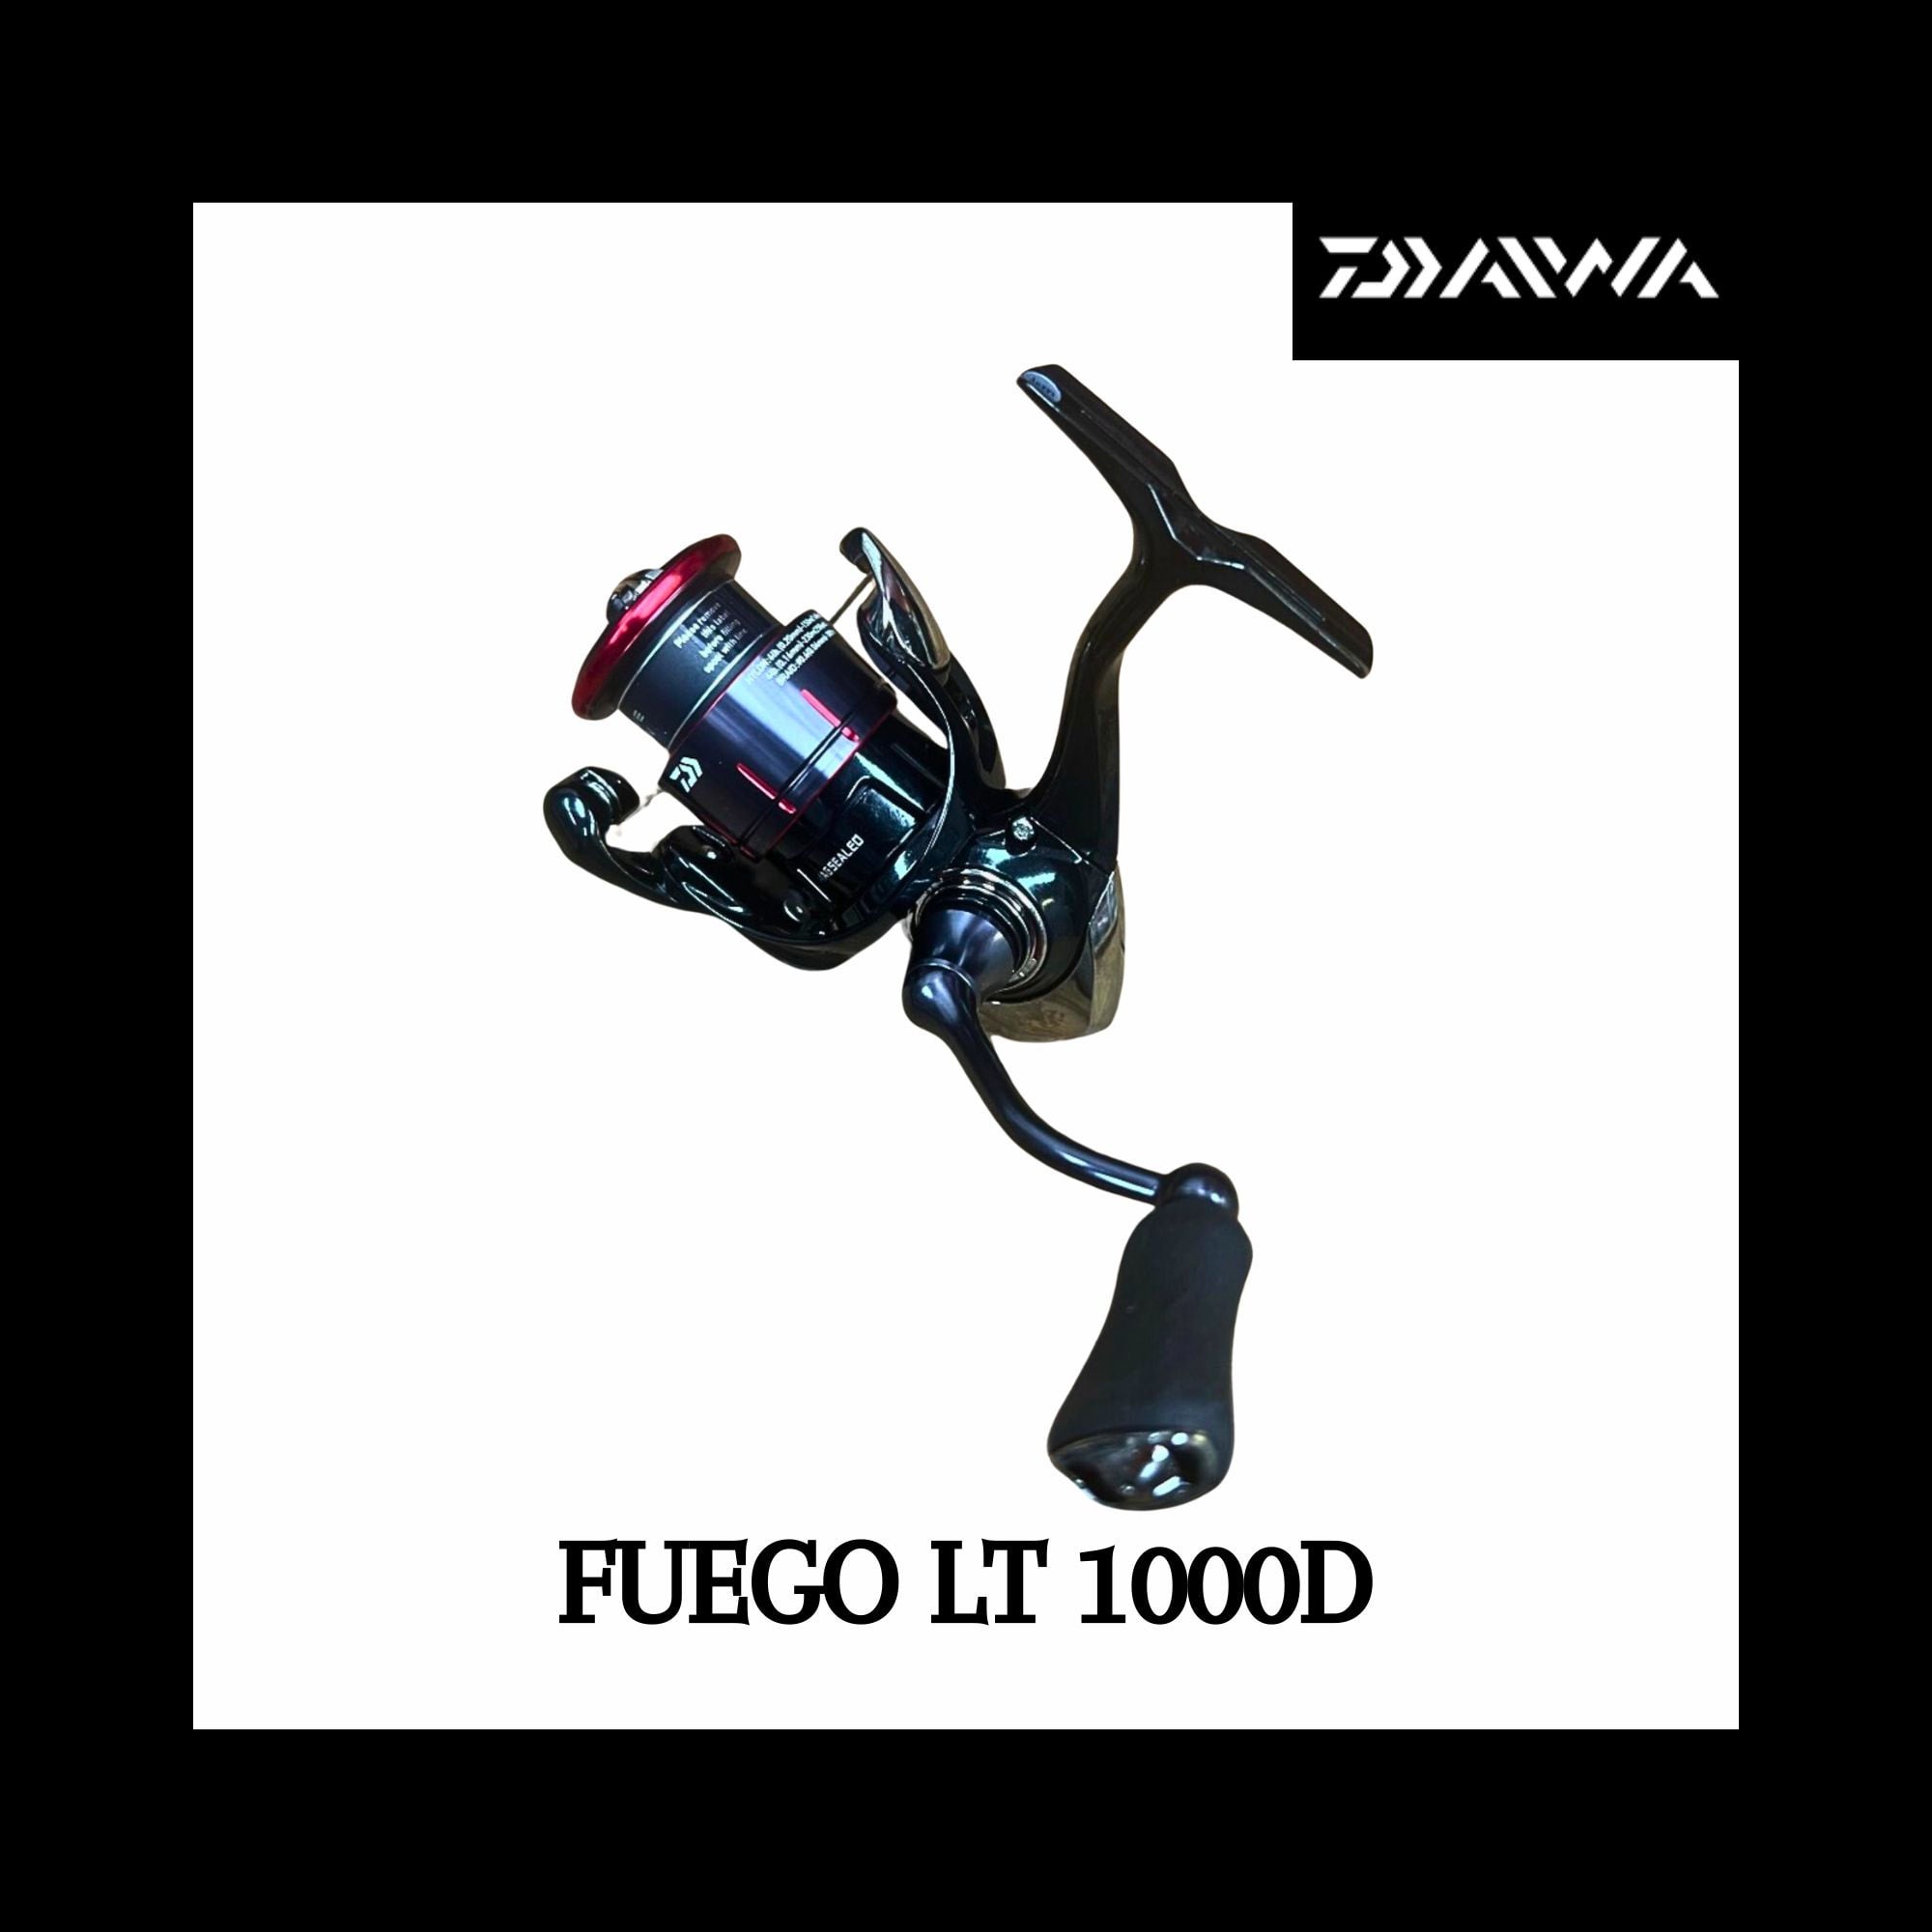 Fuego LT 1000D Spinning Fishing Reel, DAIWA, Fishing Store